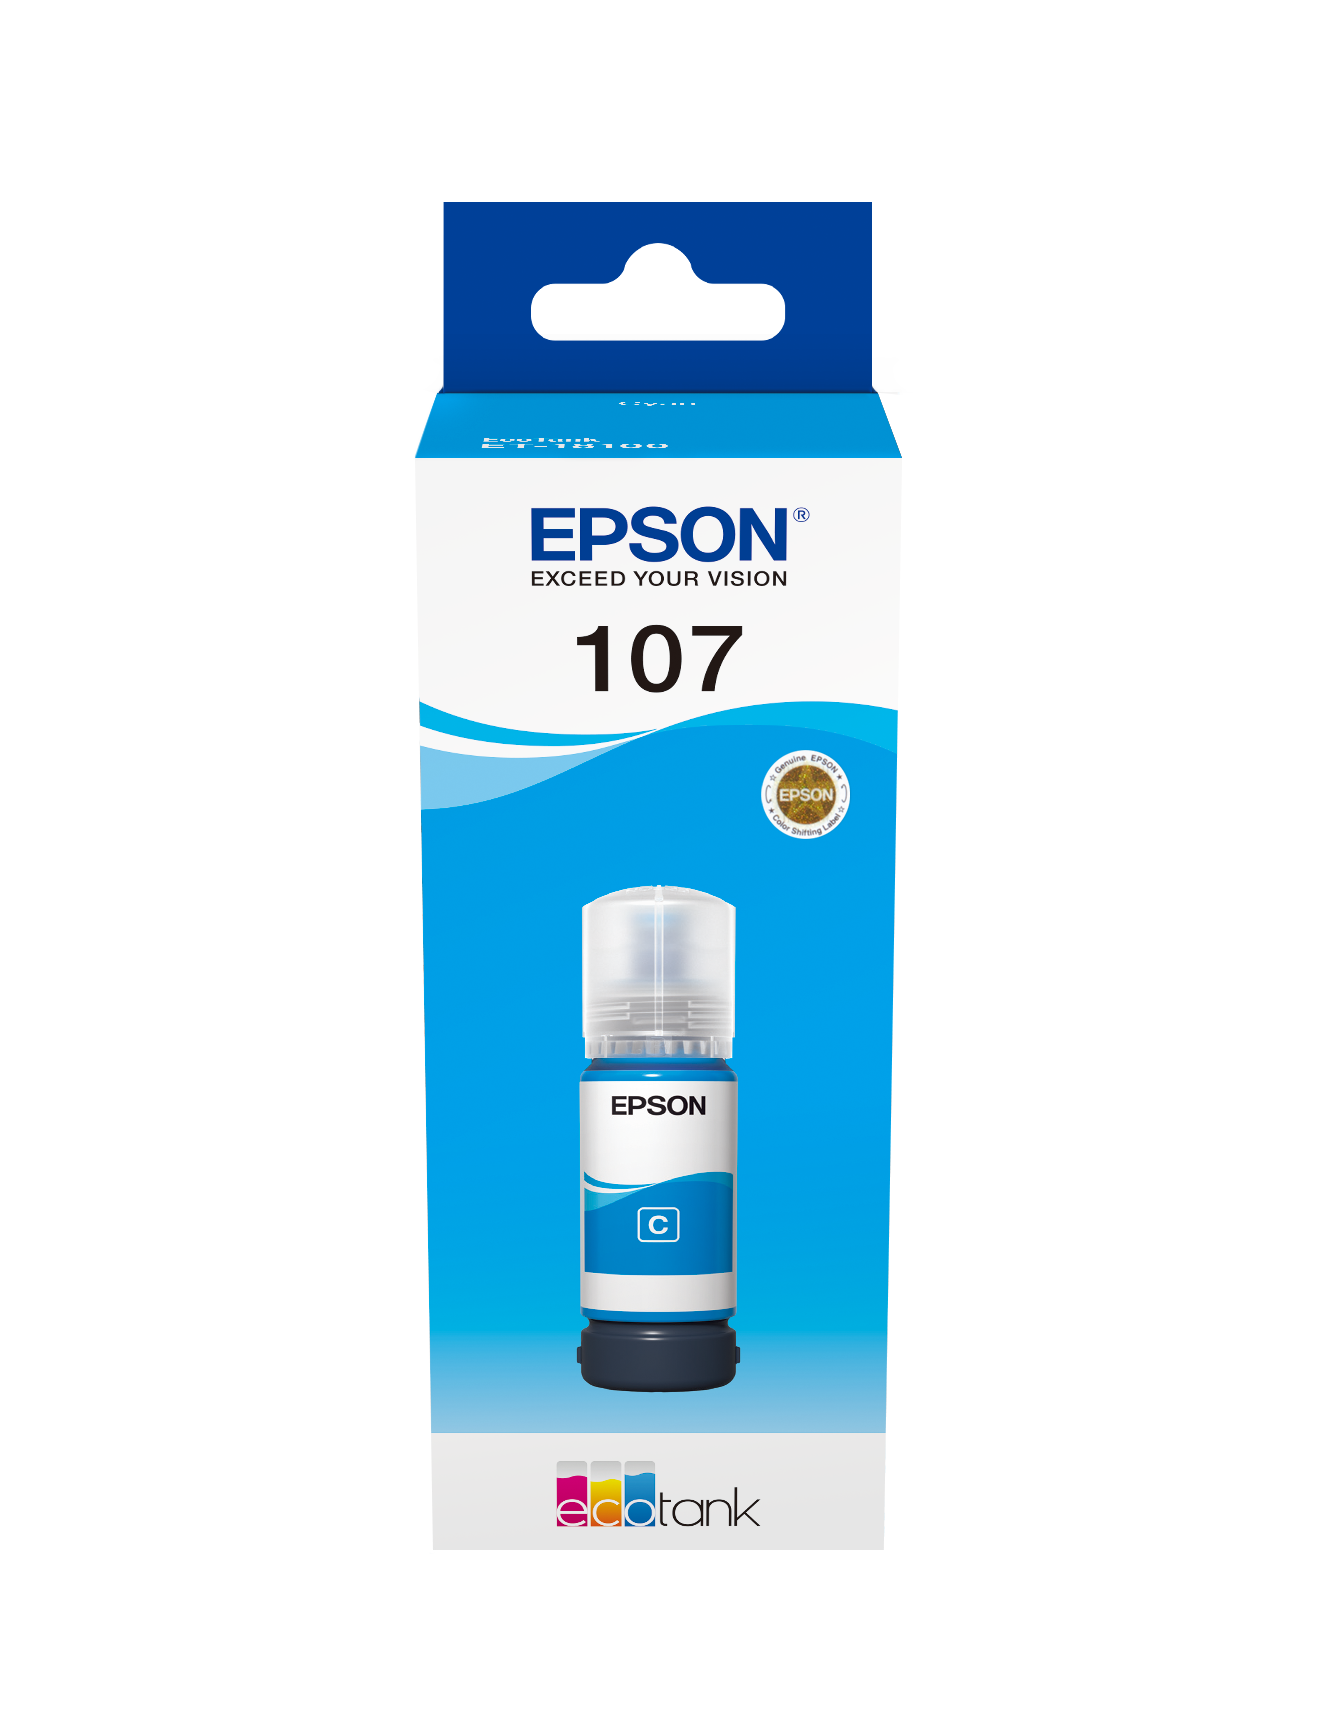 Epson EcoTank ET-18100 Impresora Fotográfica A3+ Wifi con Depósito